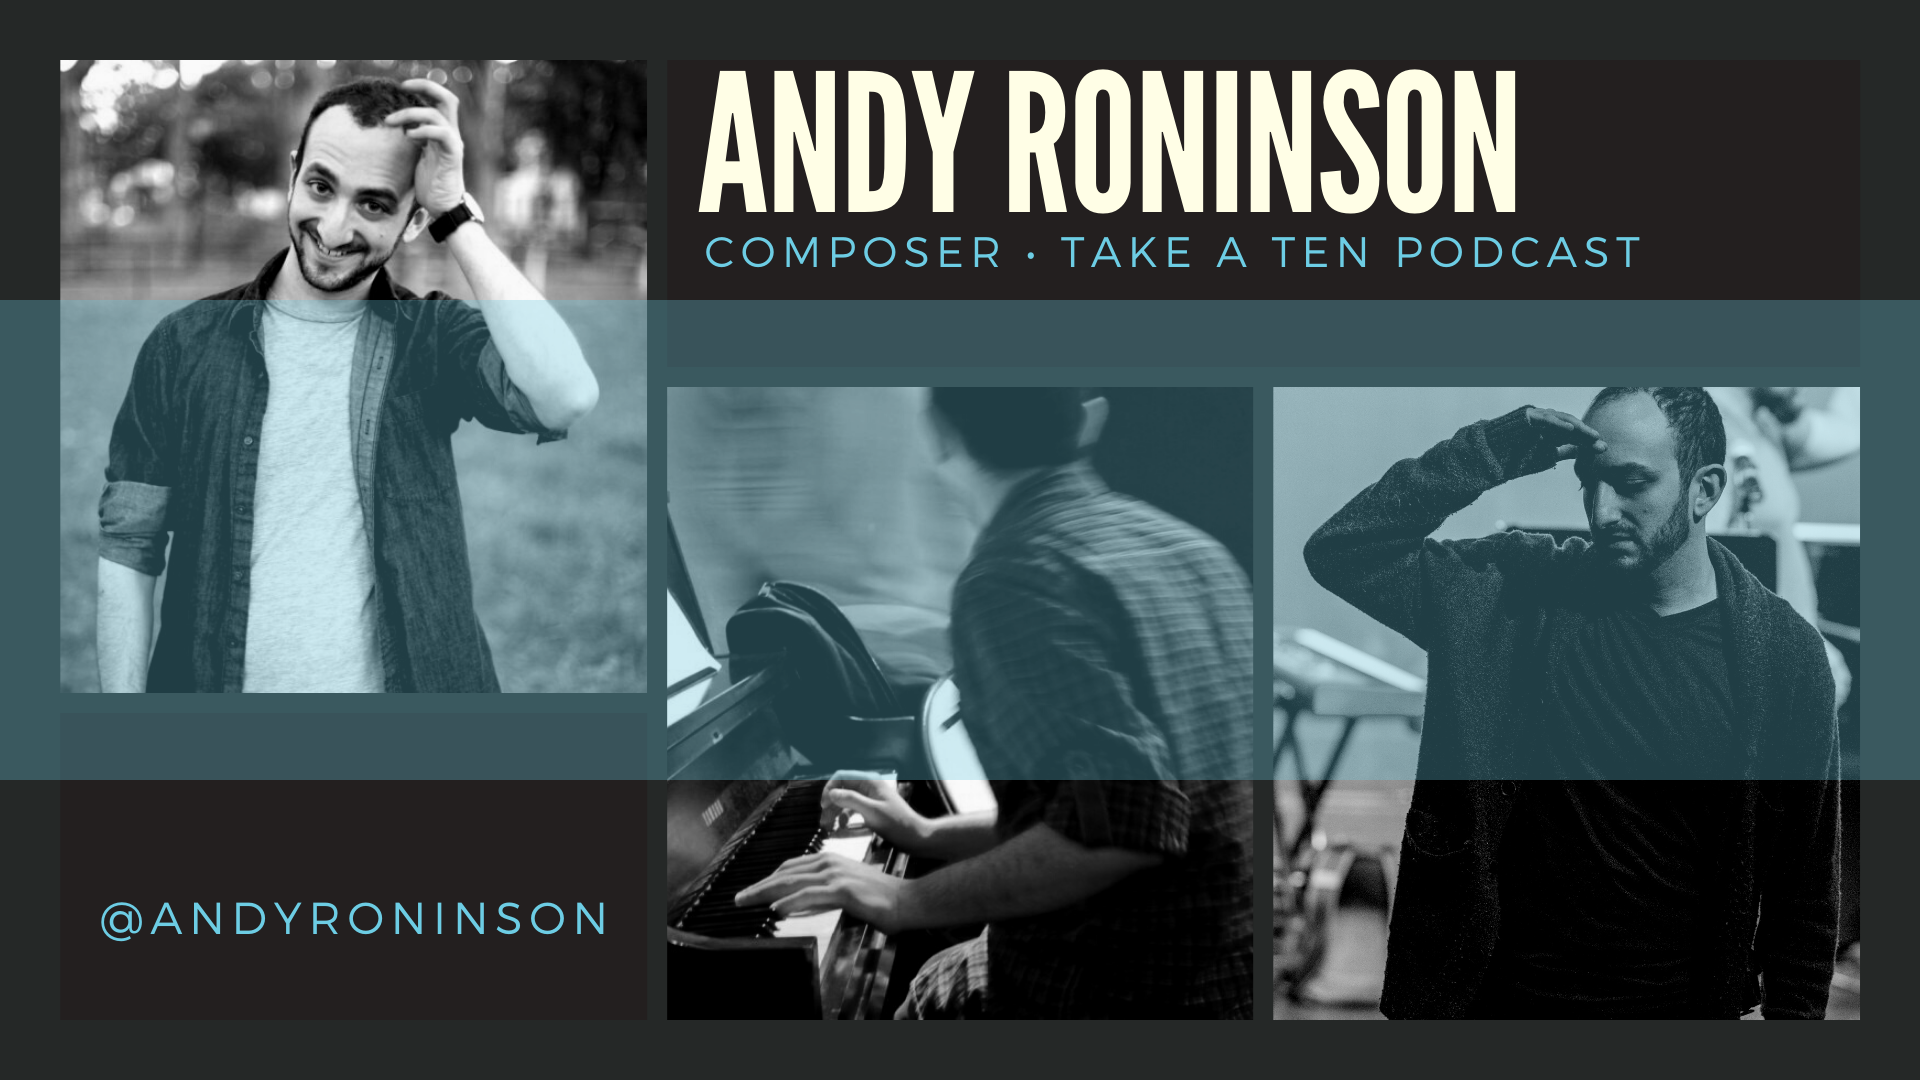 Andy Roninson